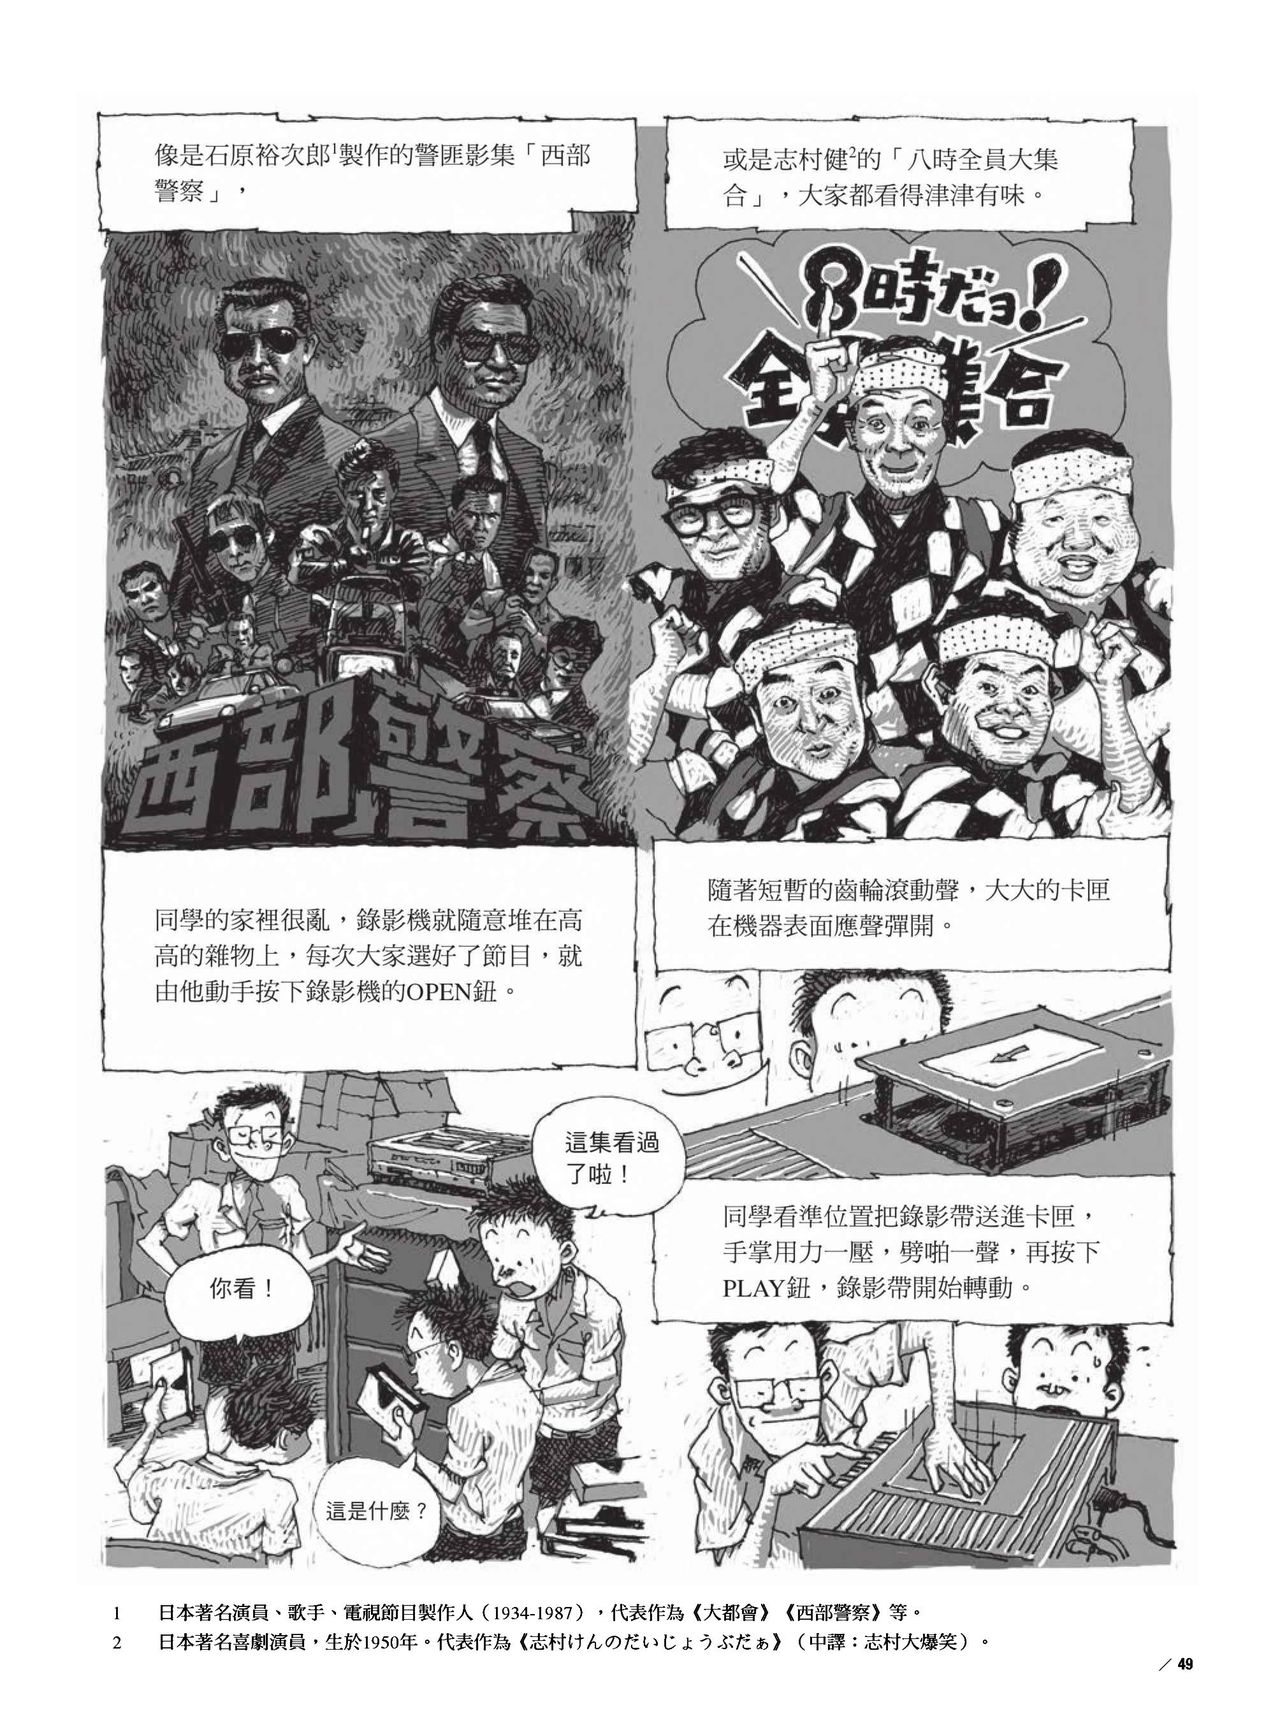 [Sean Chuang] 80’S Diary in Taiwan 2 49